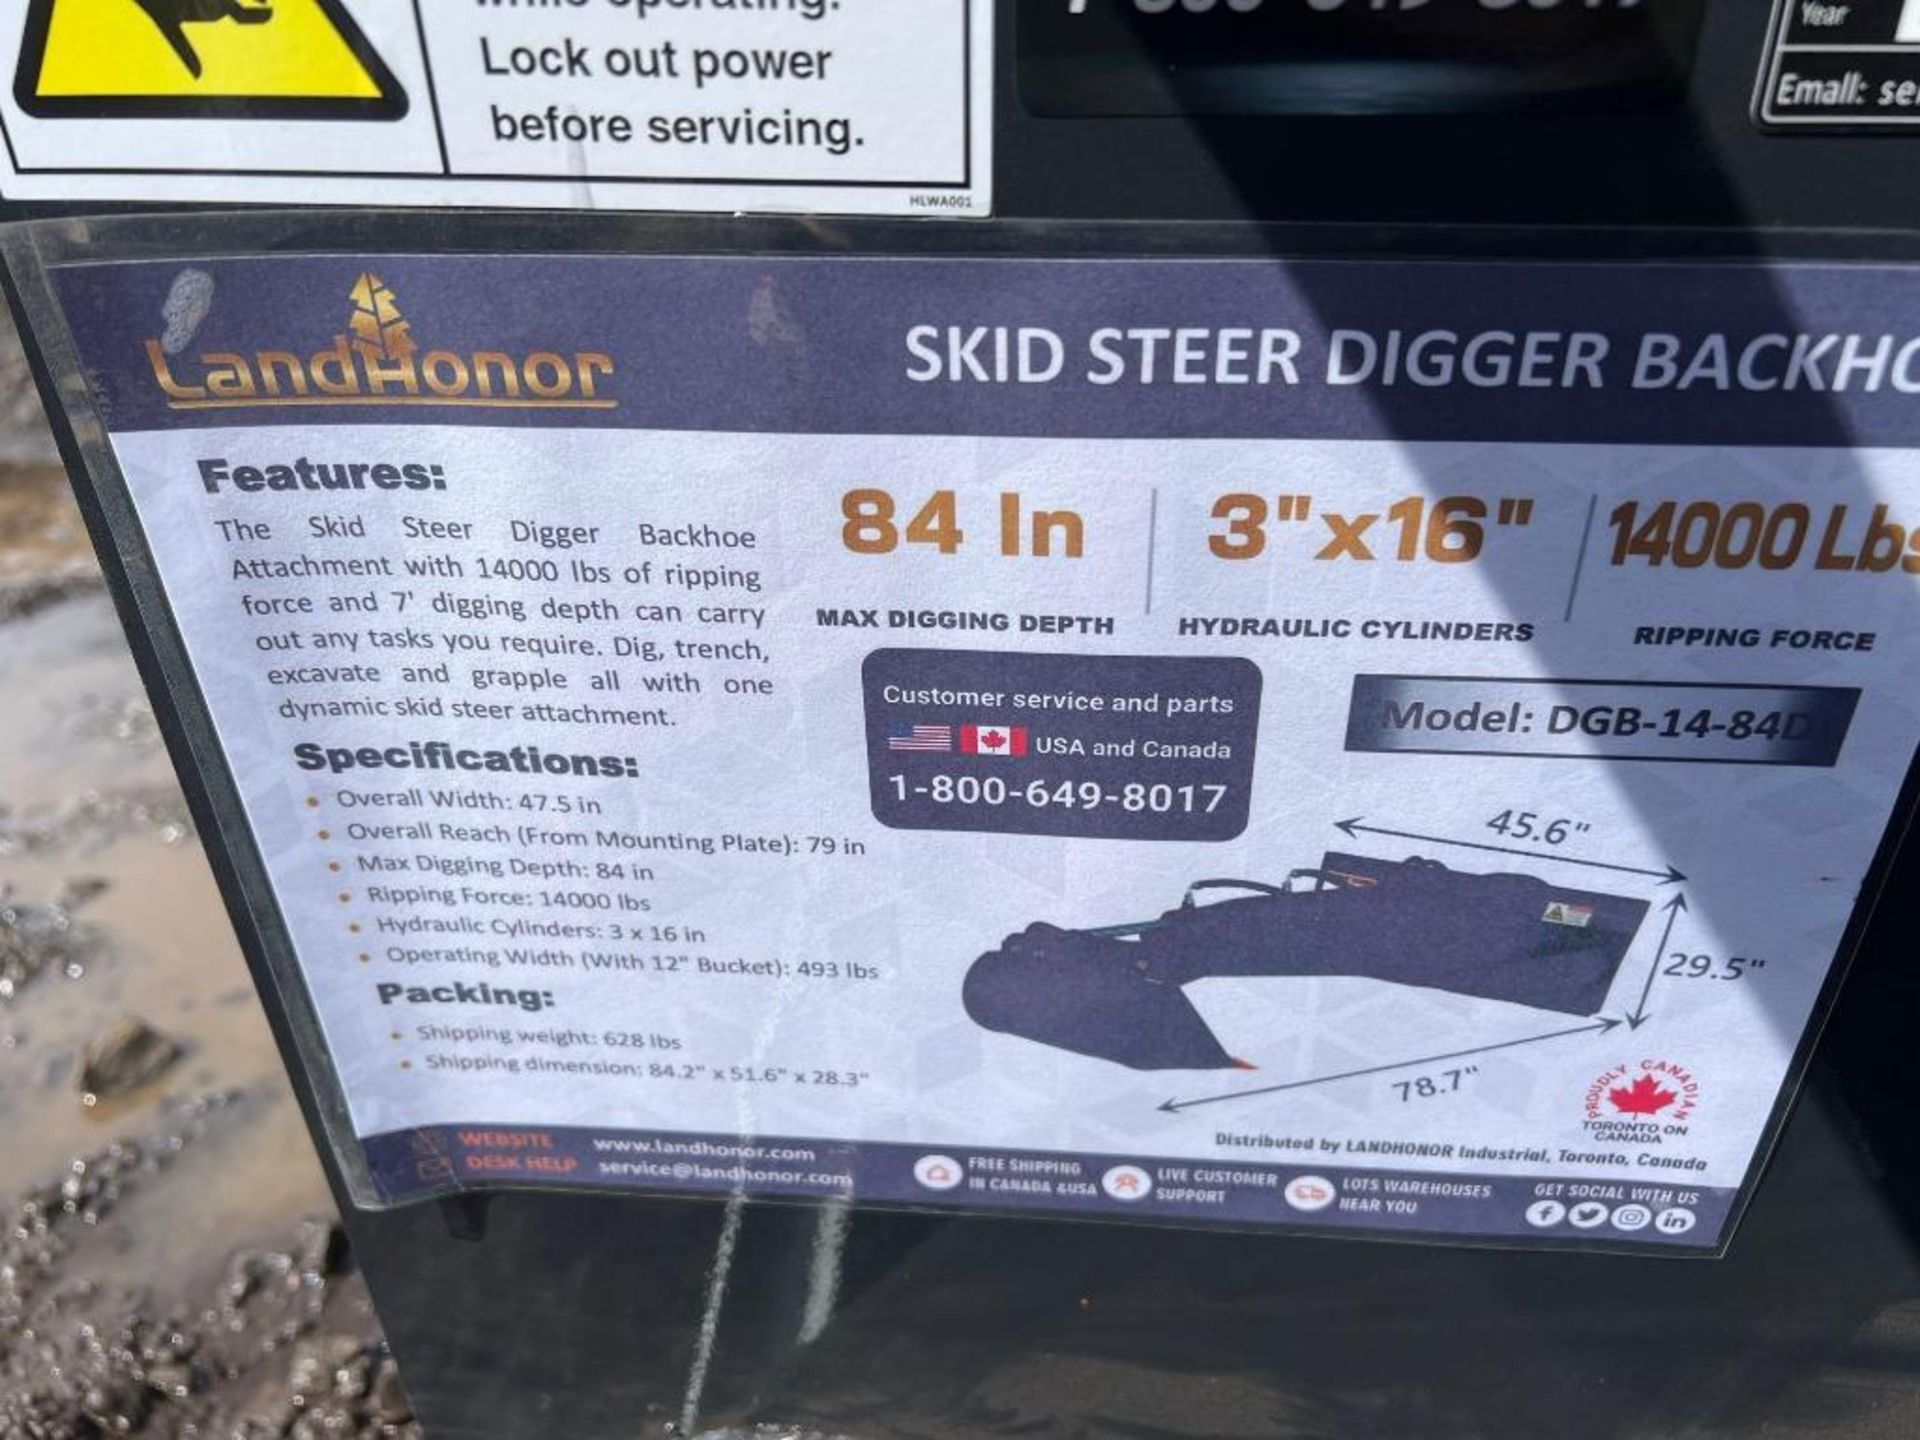 New LandHonor Co. Skid Steer Backhoe Attachment - Image 2 of 3